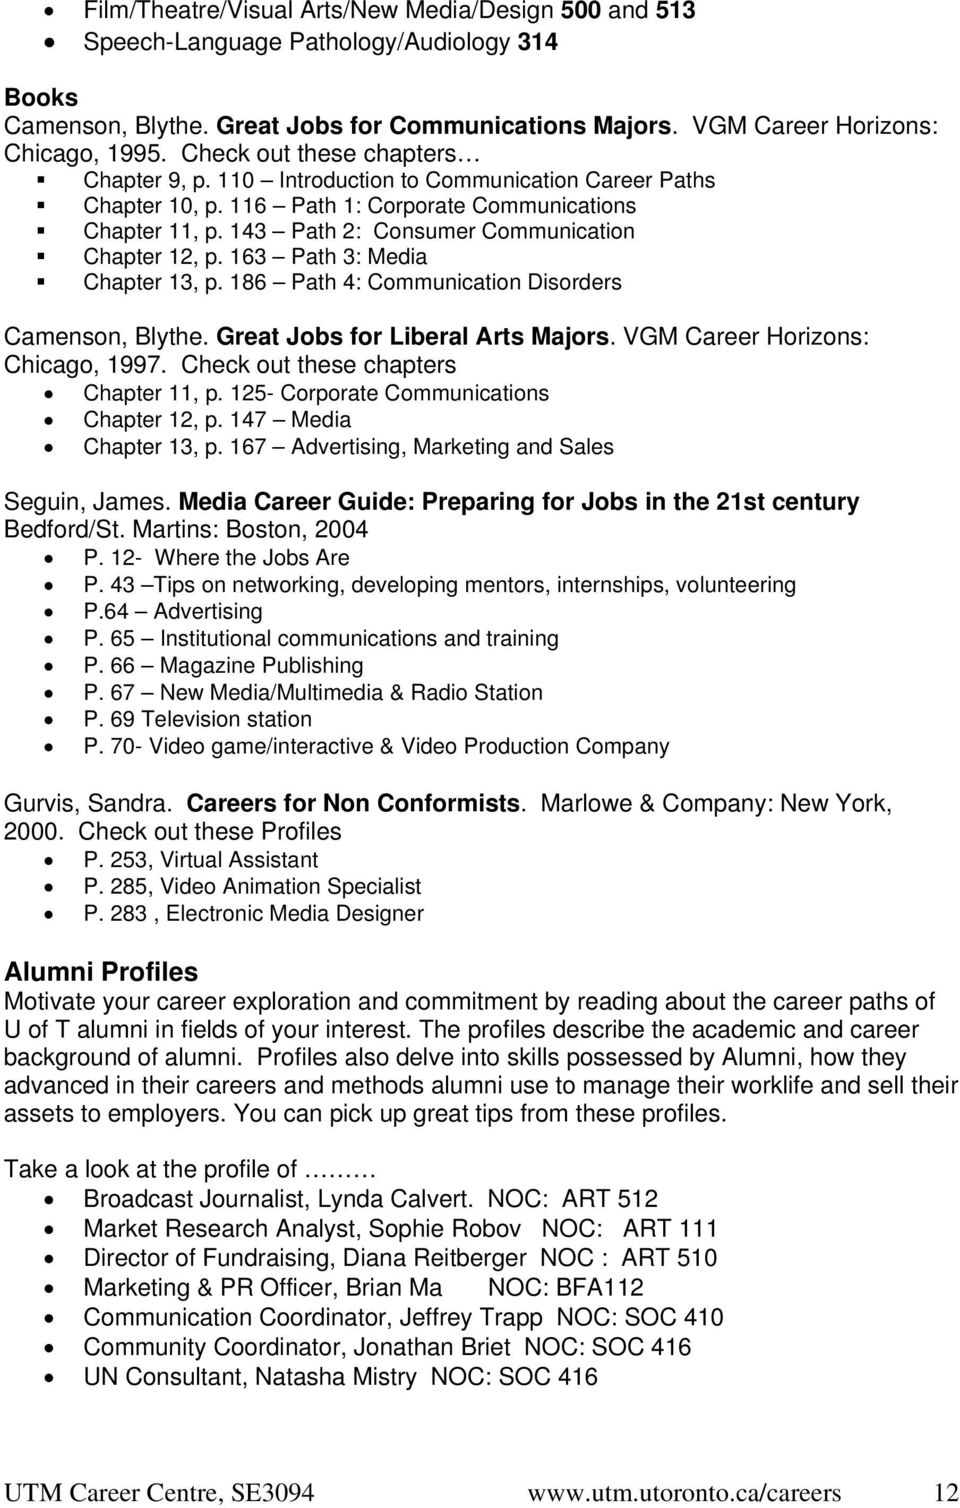 ccit futures some career options pdf